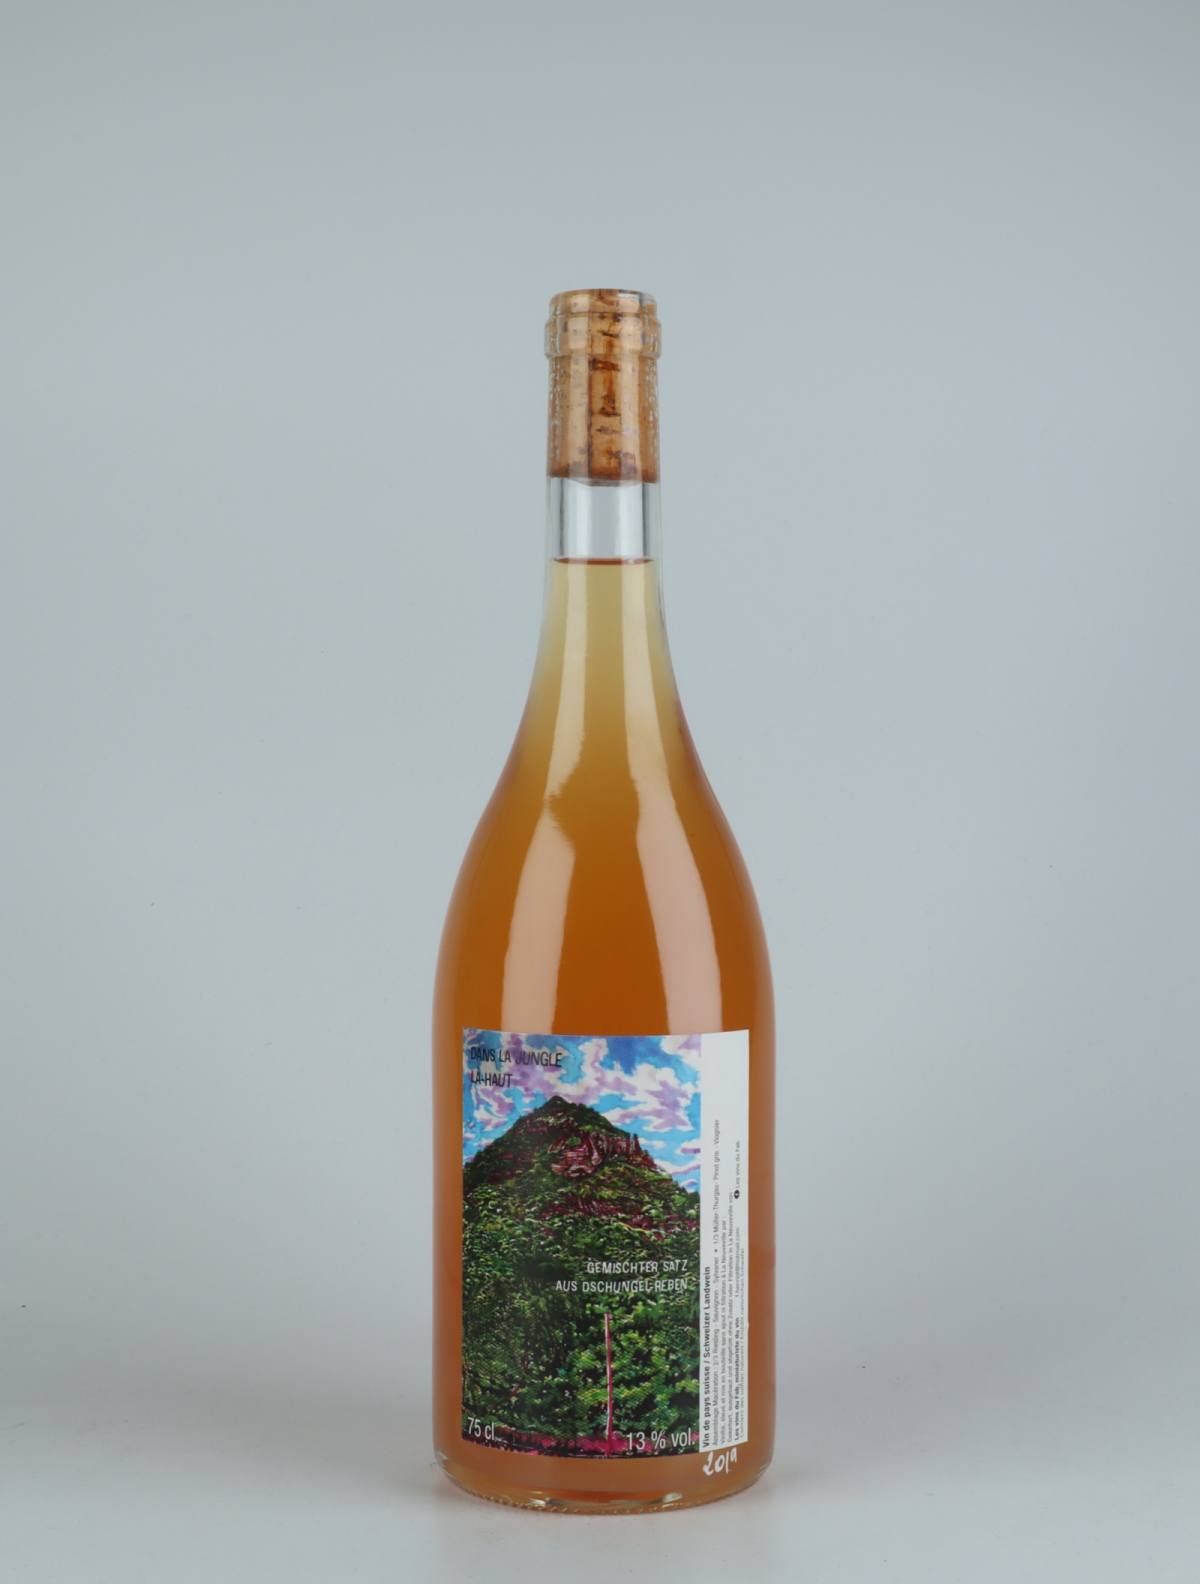 En flaske 2019 Dans la Jungle La-Haut Orange vin fra Les Vins du Fab, Neuchâtel i Schweiz